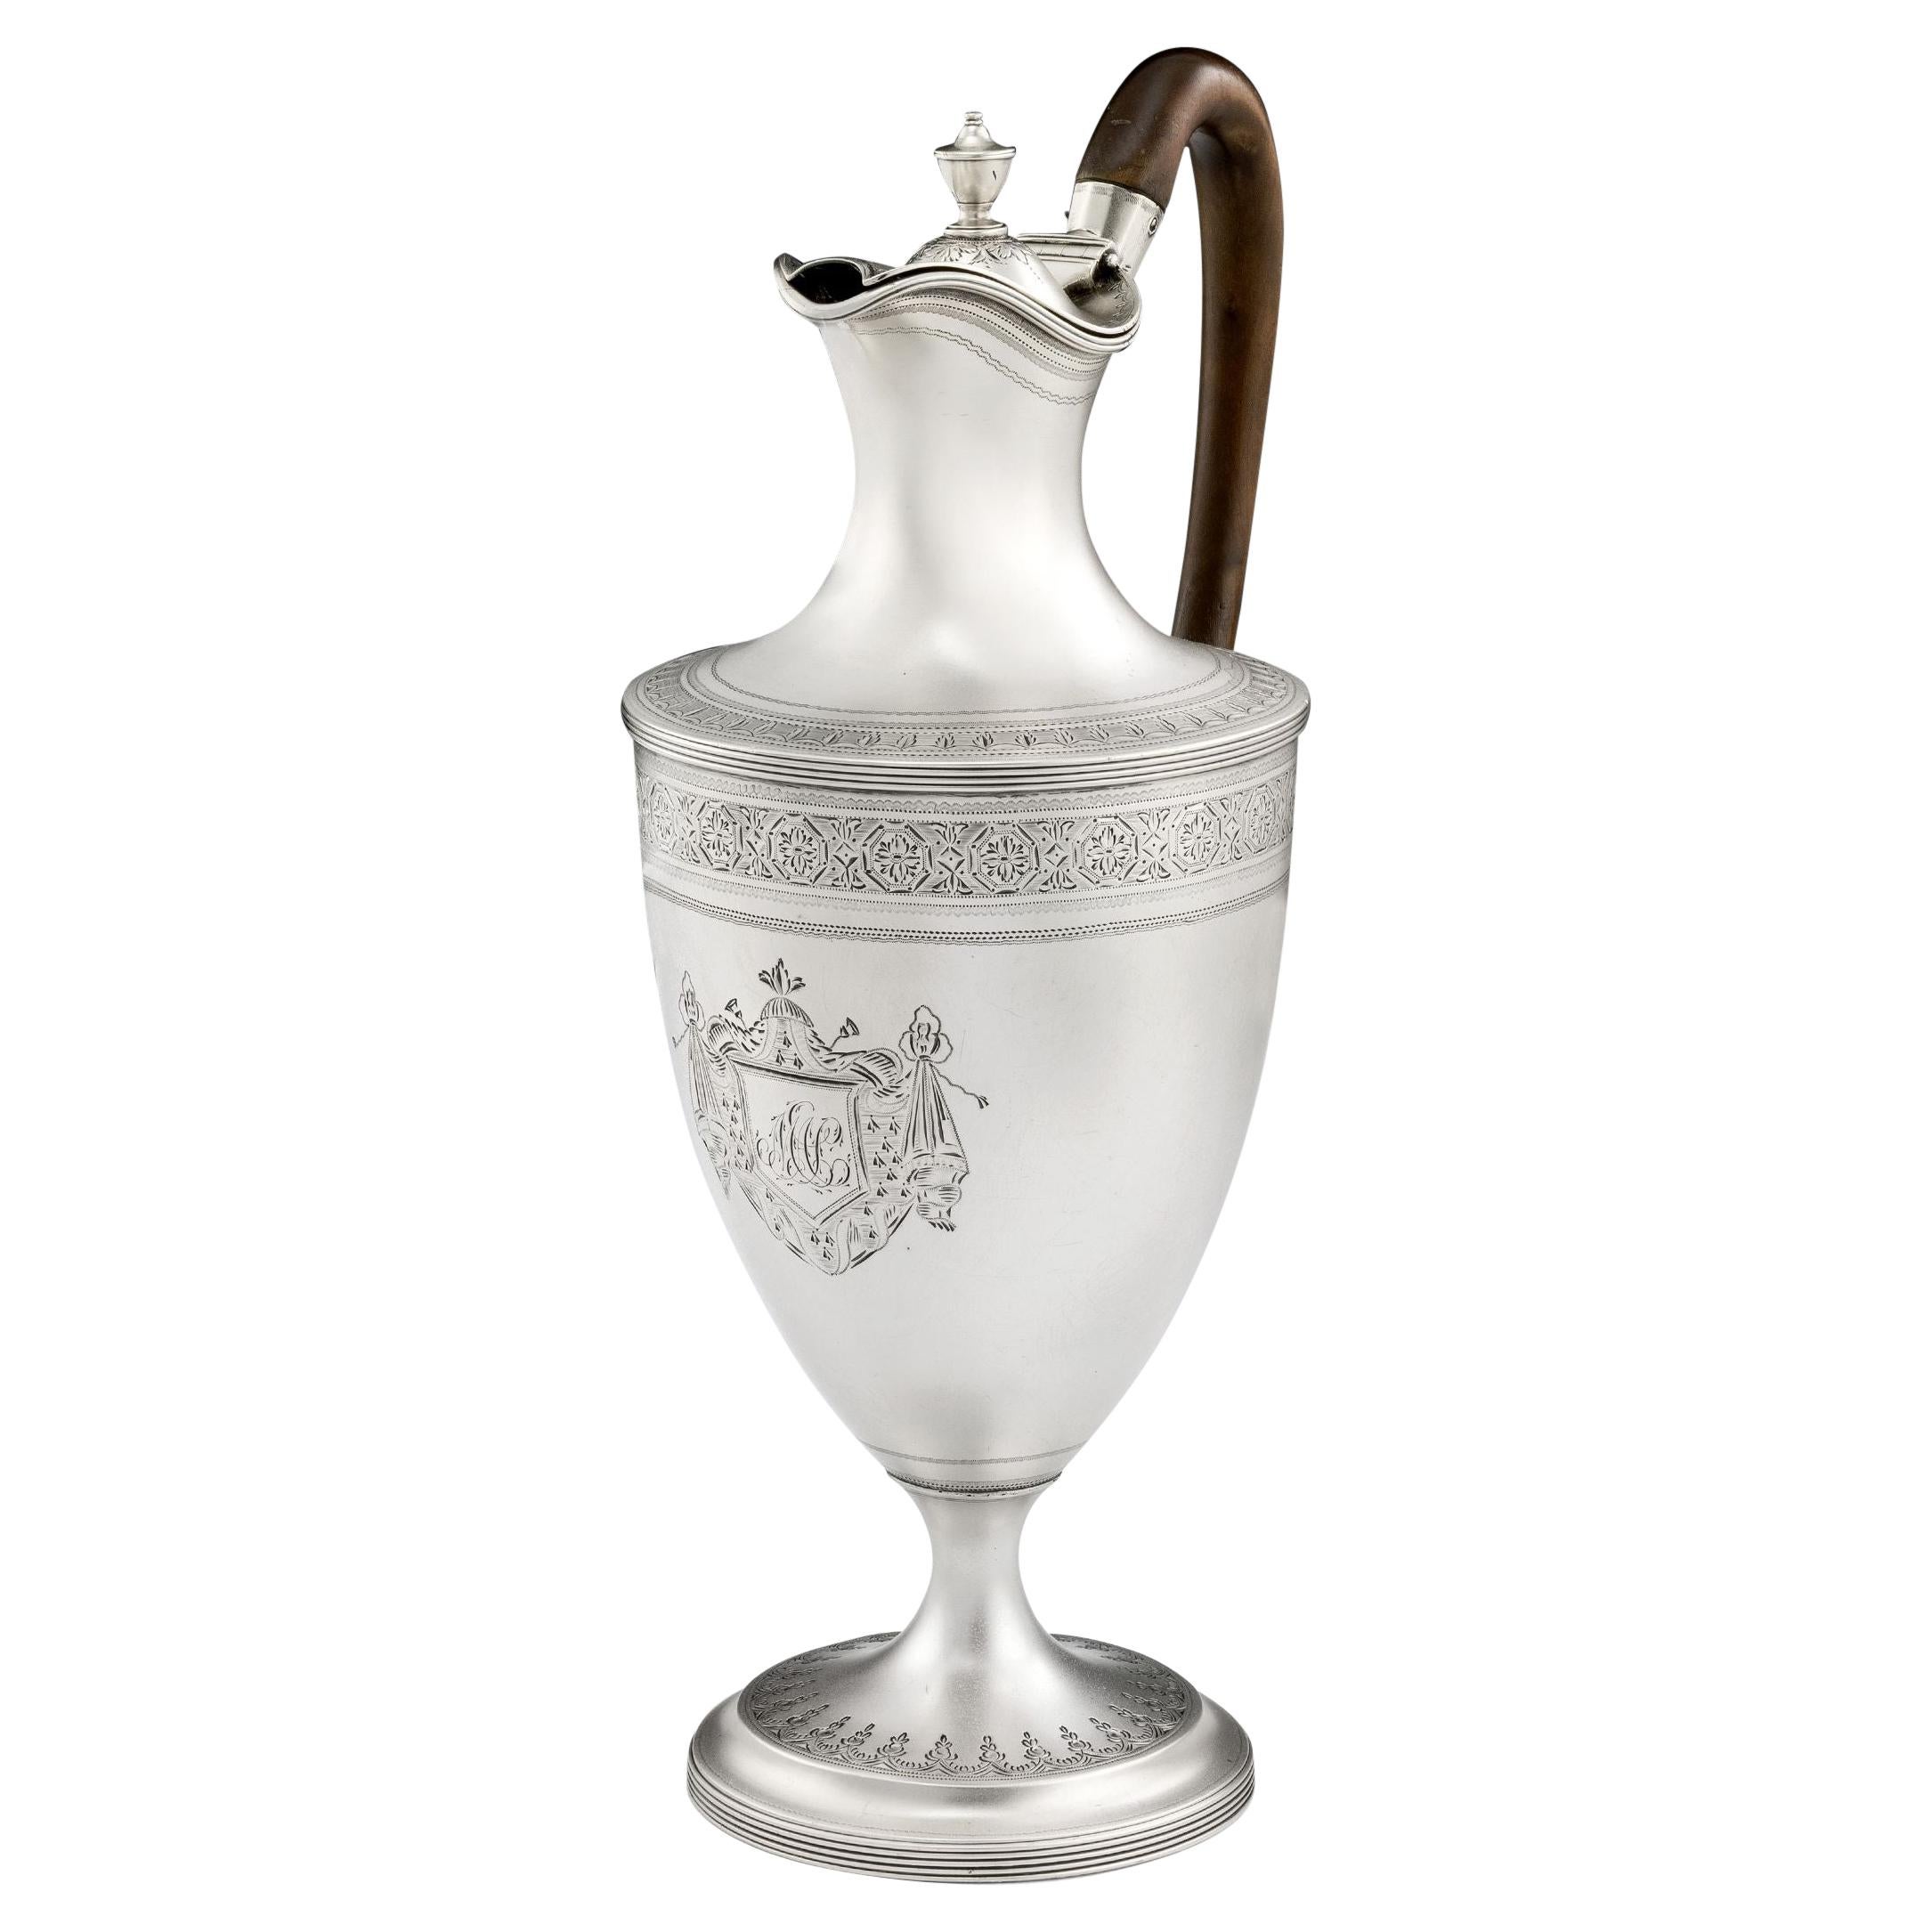 George III Classical Water/Wine Ewer Made in London in 1791 by John Robins